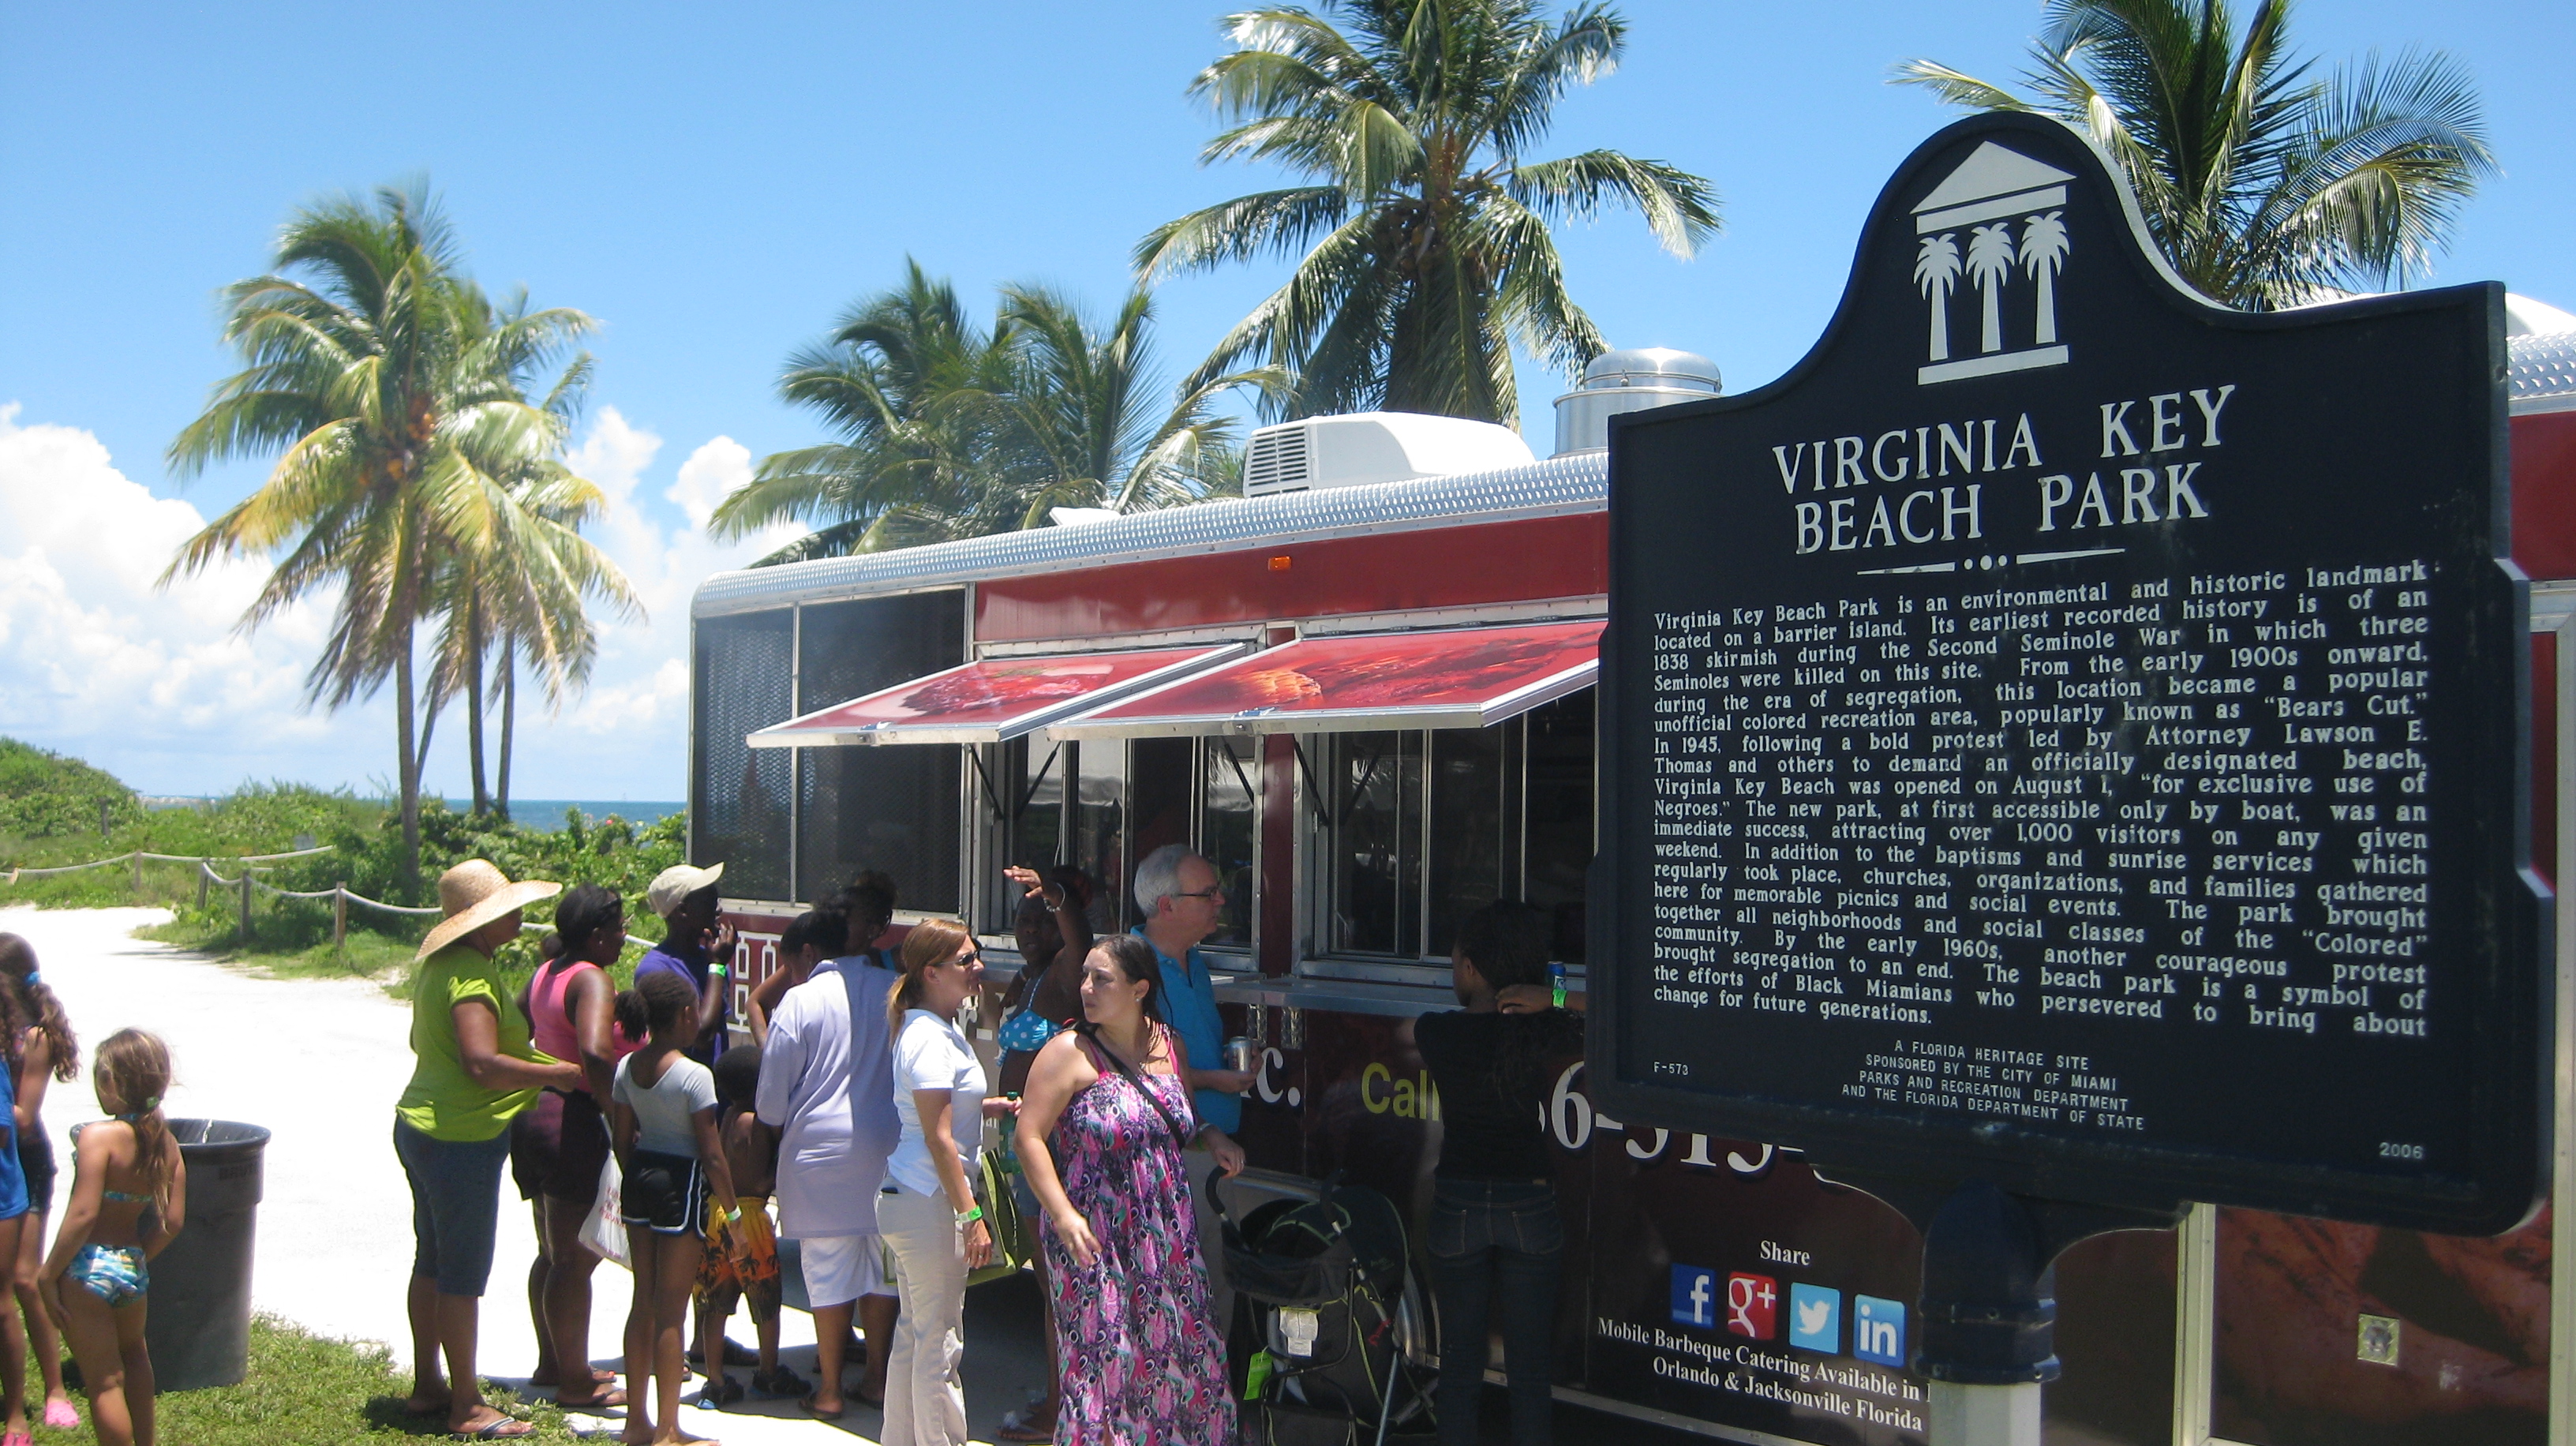 Historic Virginia Key Beach Park 69th Birthday Celebration